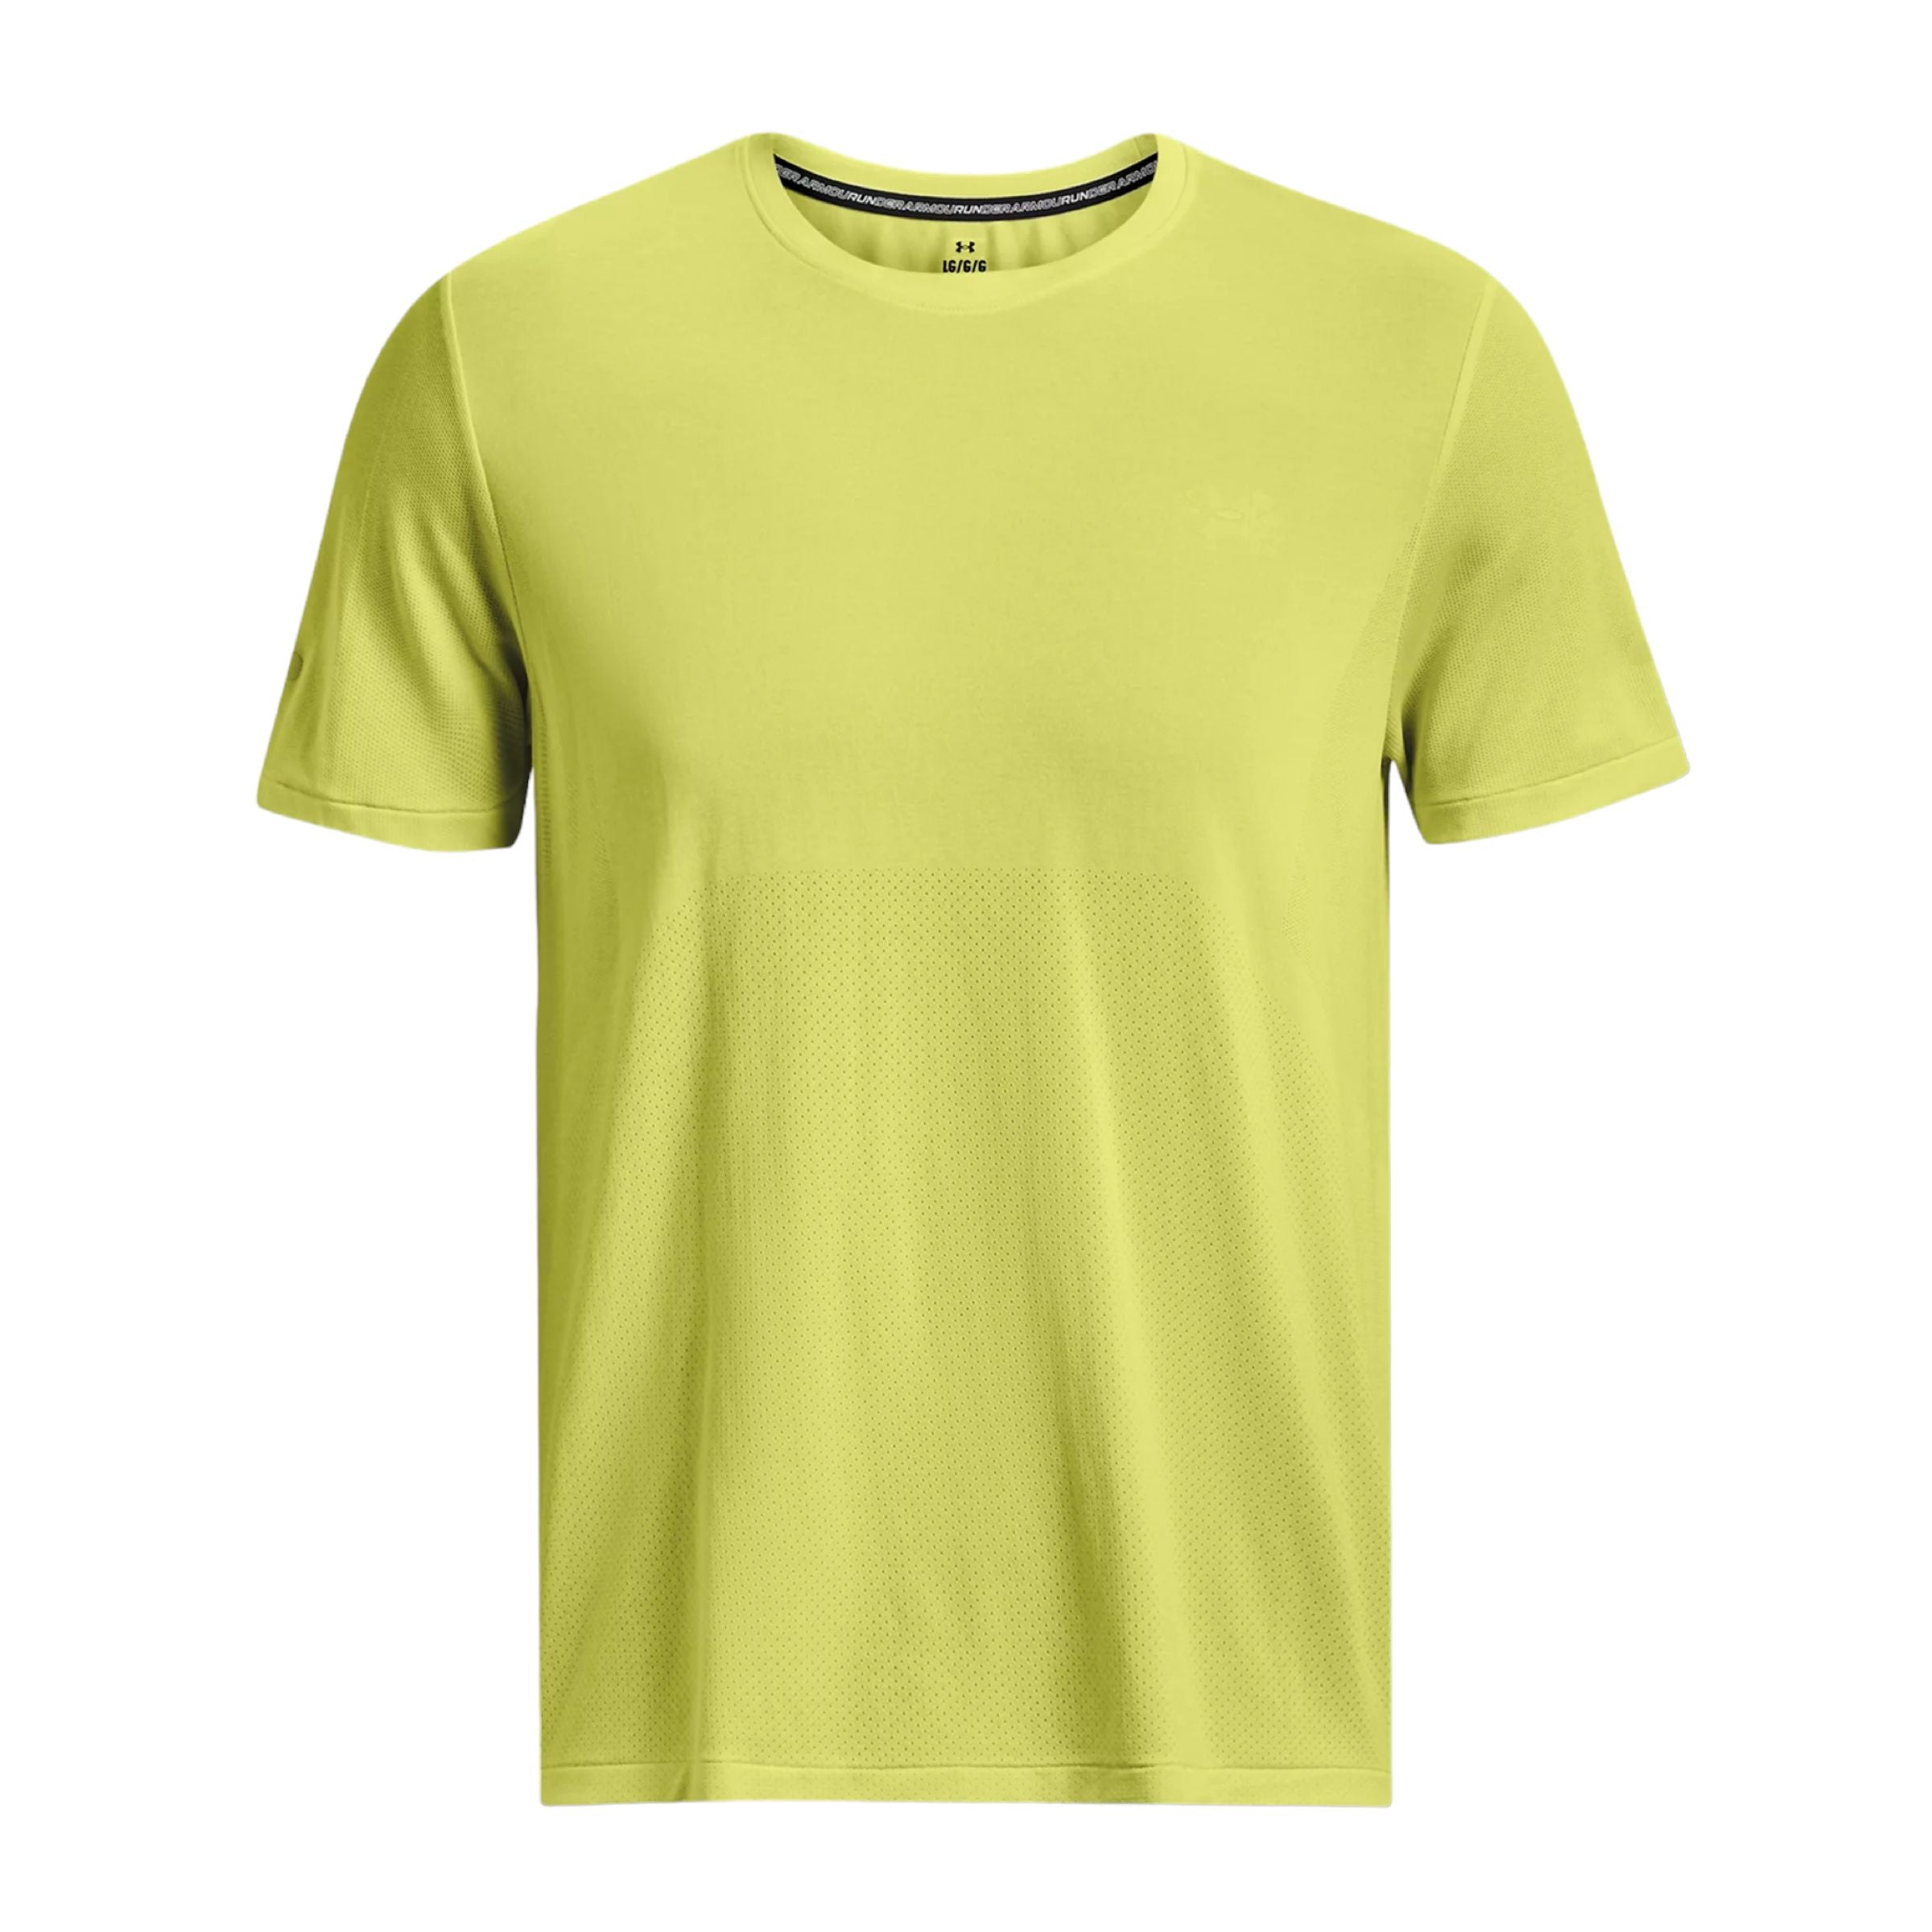 T-shirt Seamless Stride Uomo Lime Yellow/Reflective